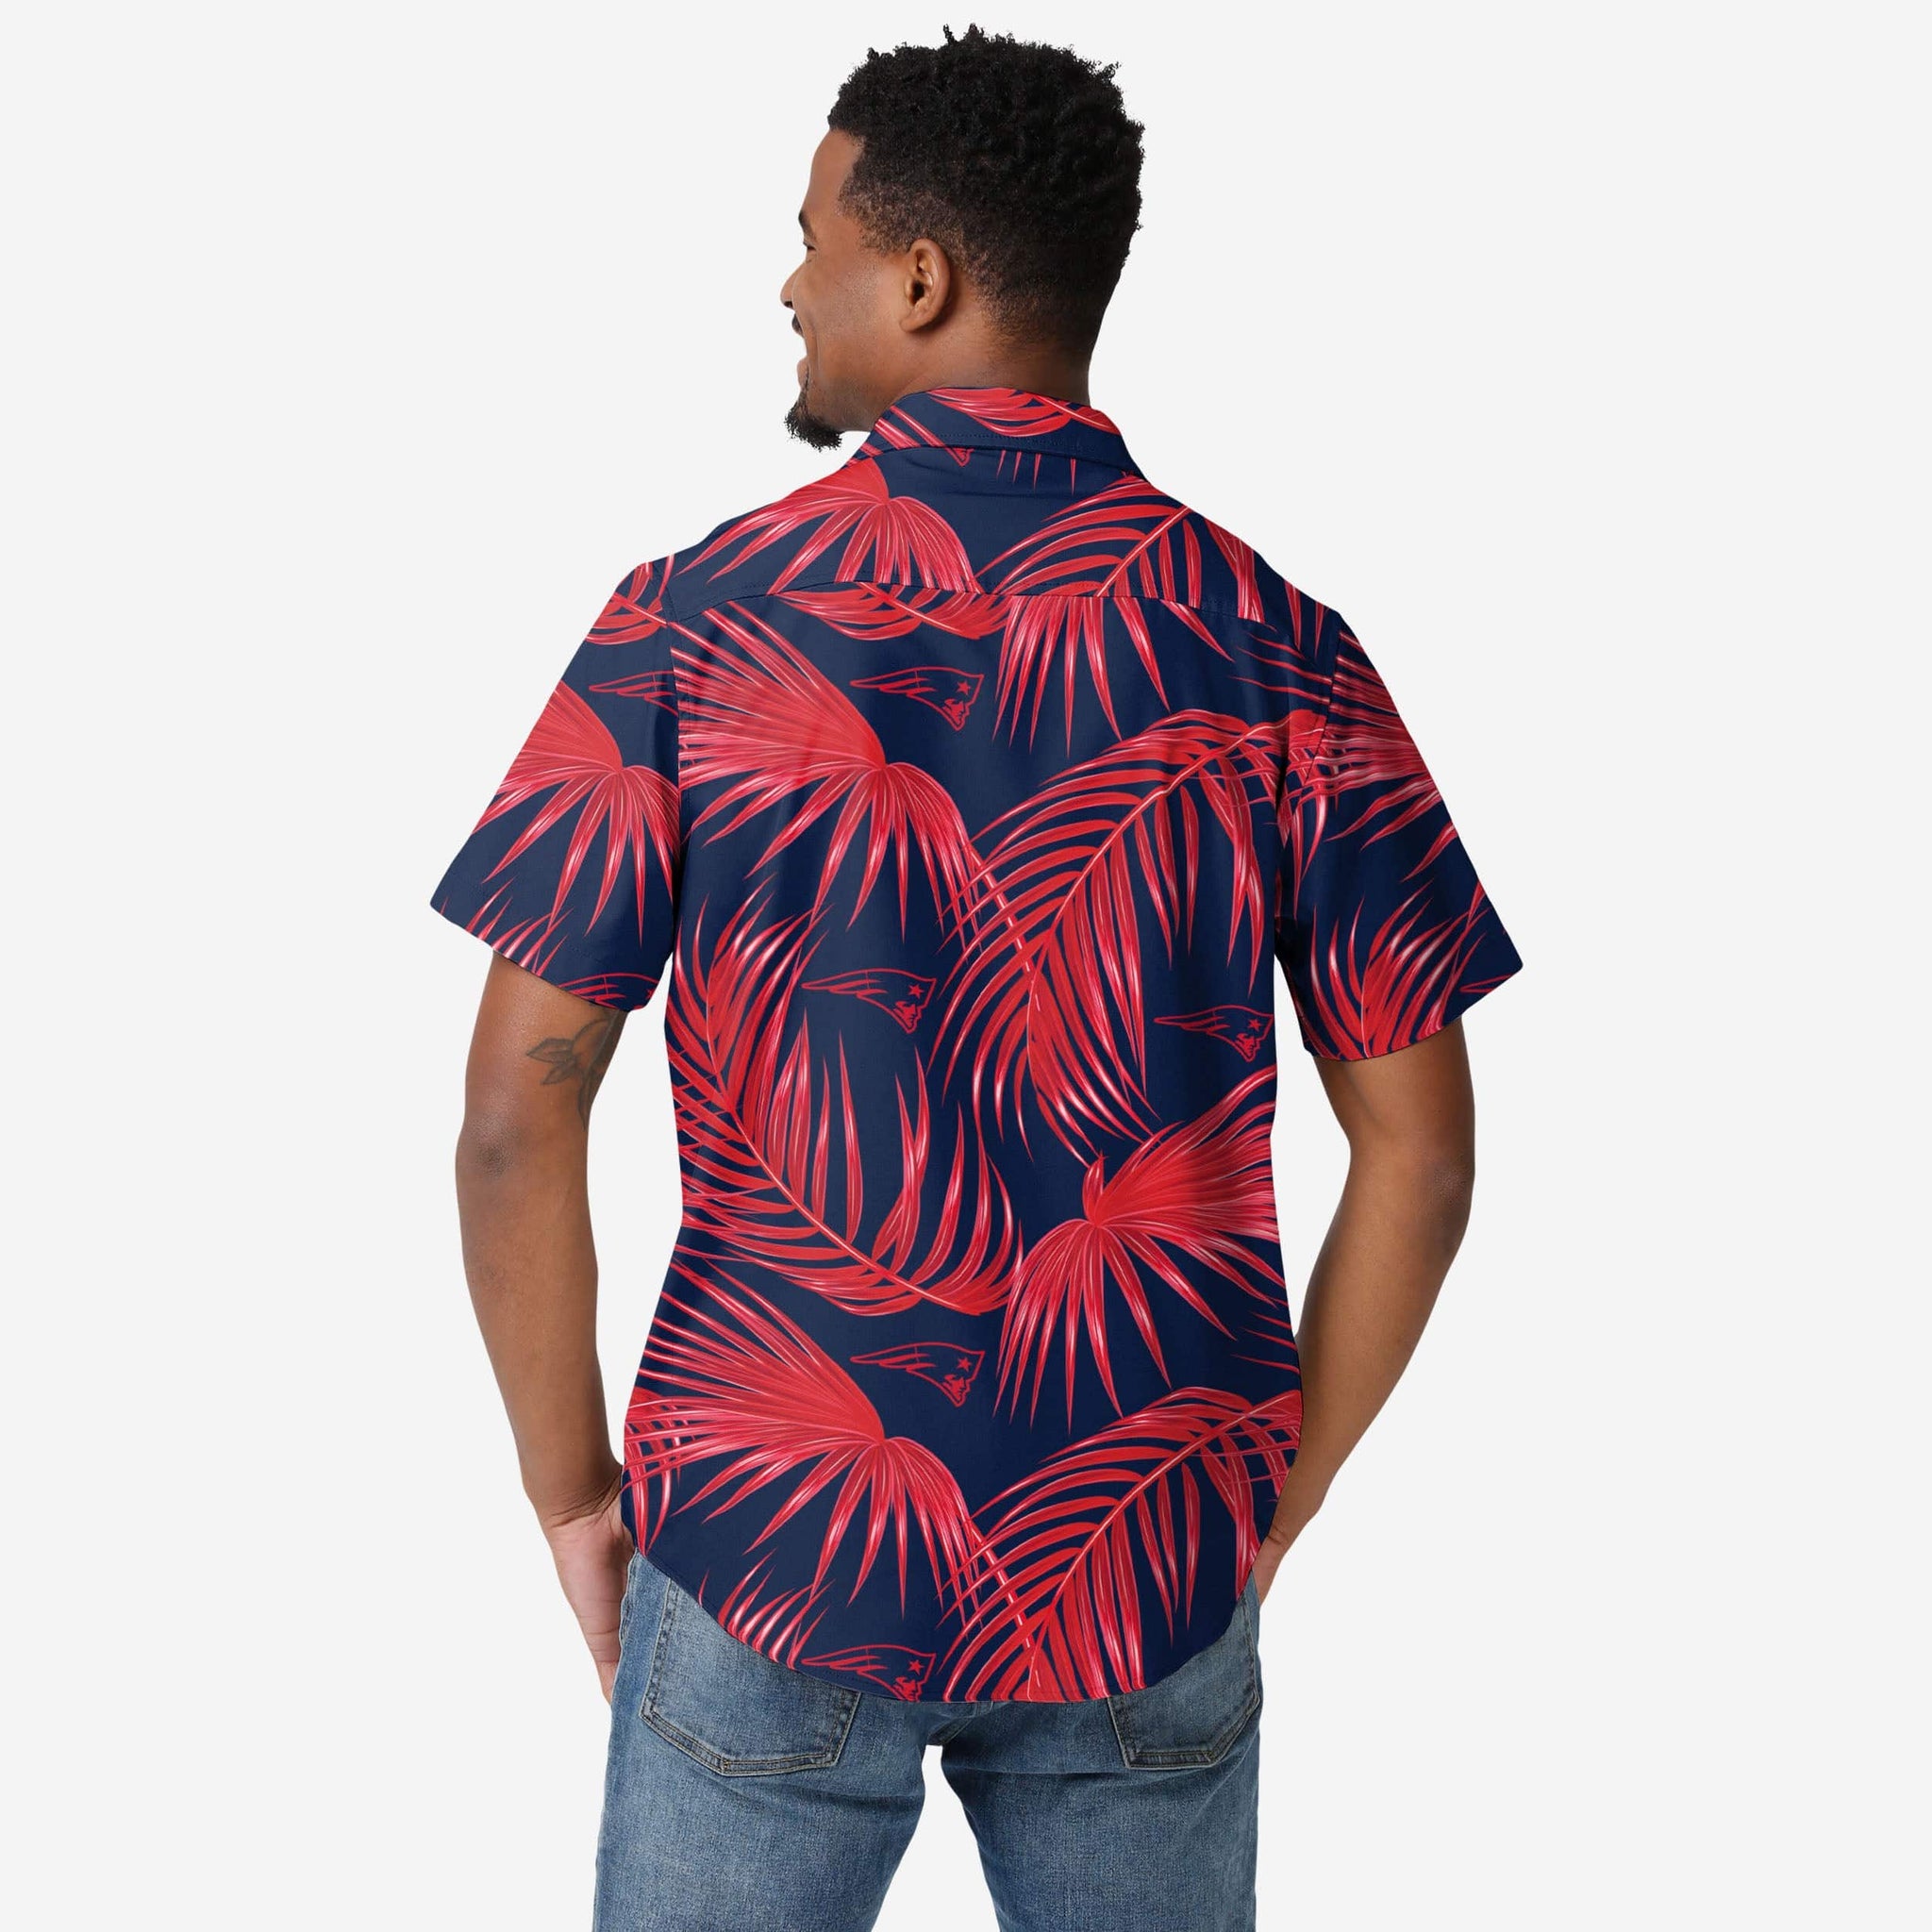 St Louis Blues-NHL Hawaiian Shirt Impressive Gift For Men And Women Fans